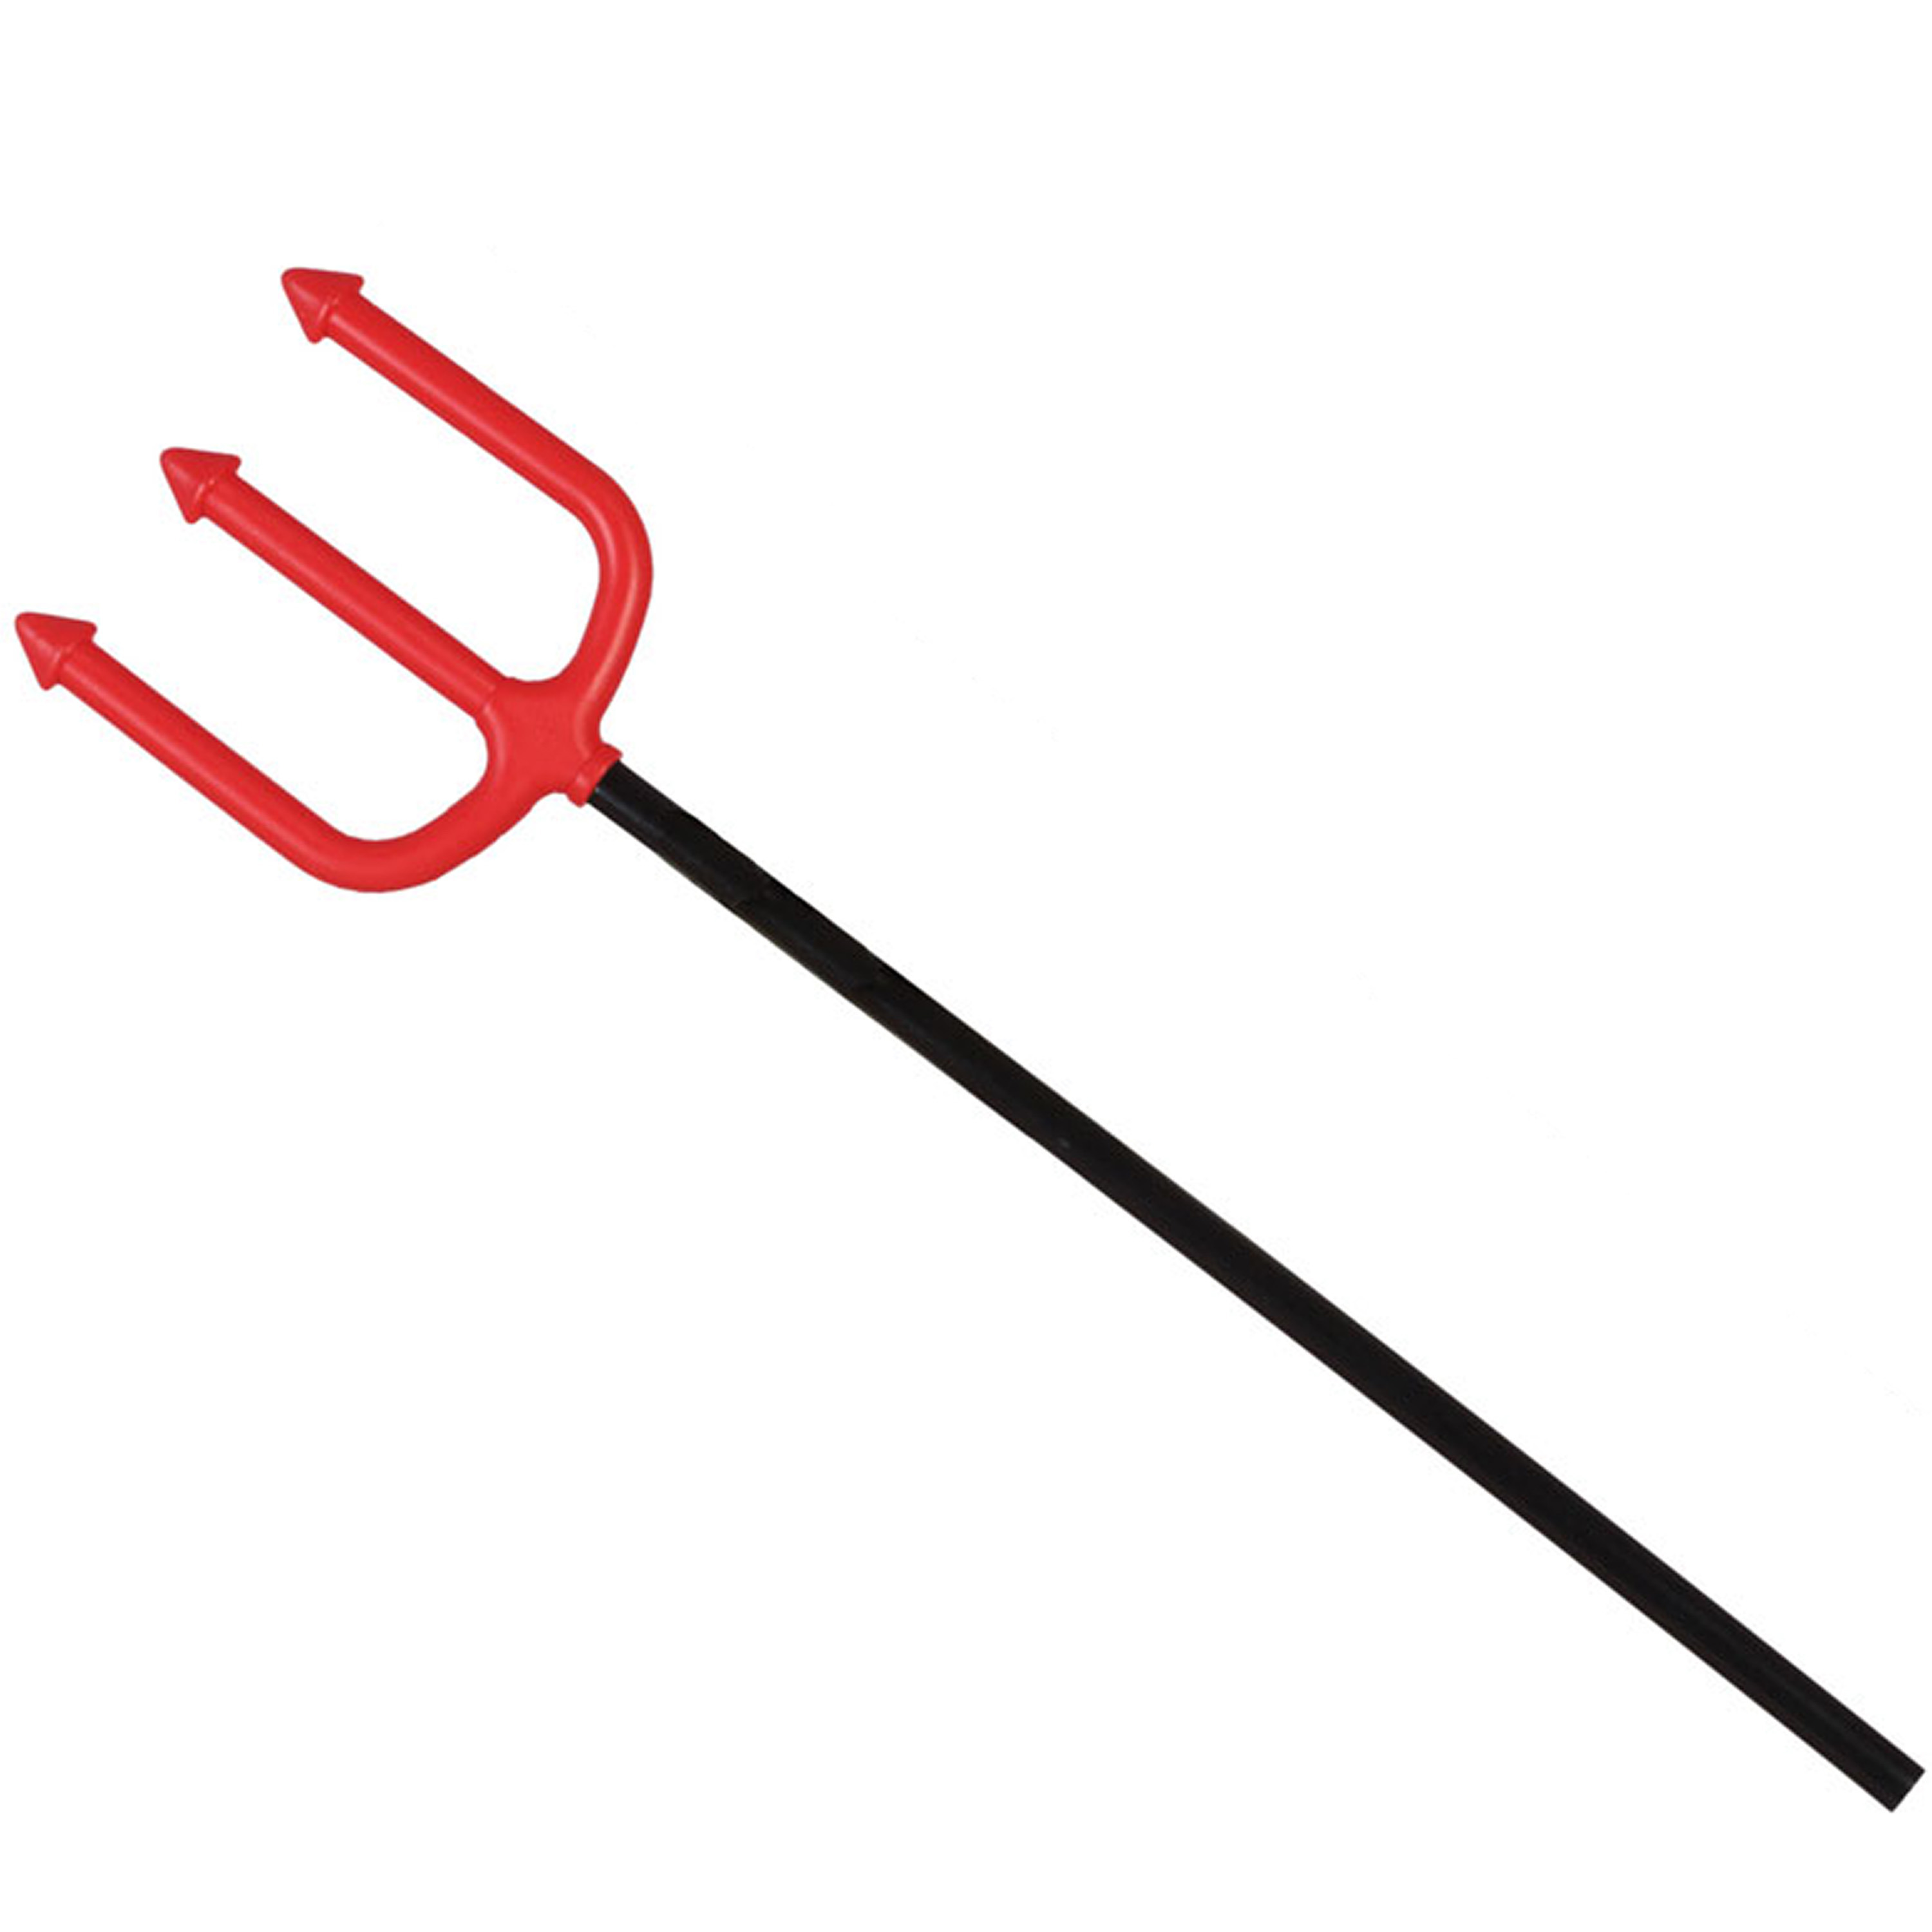 Duivel Trident-drietand vork 51 cm rood plastic verkleed accessoires